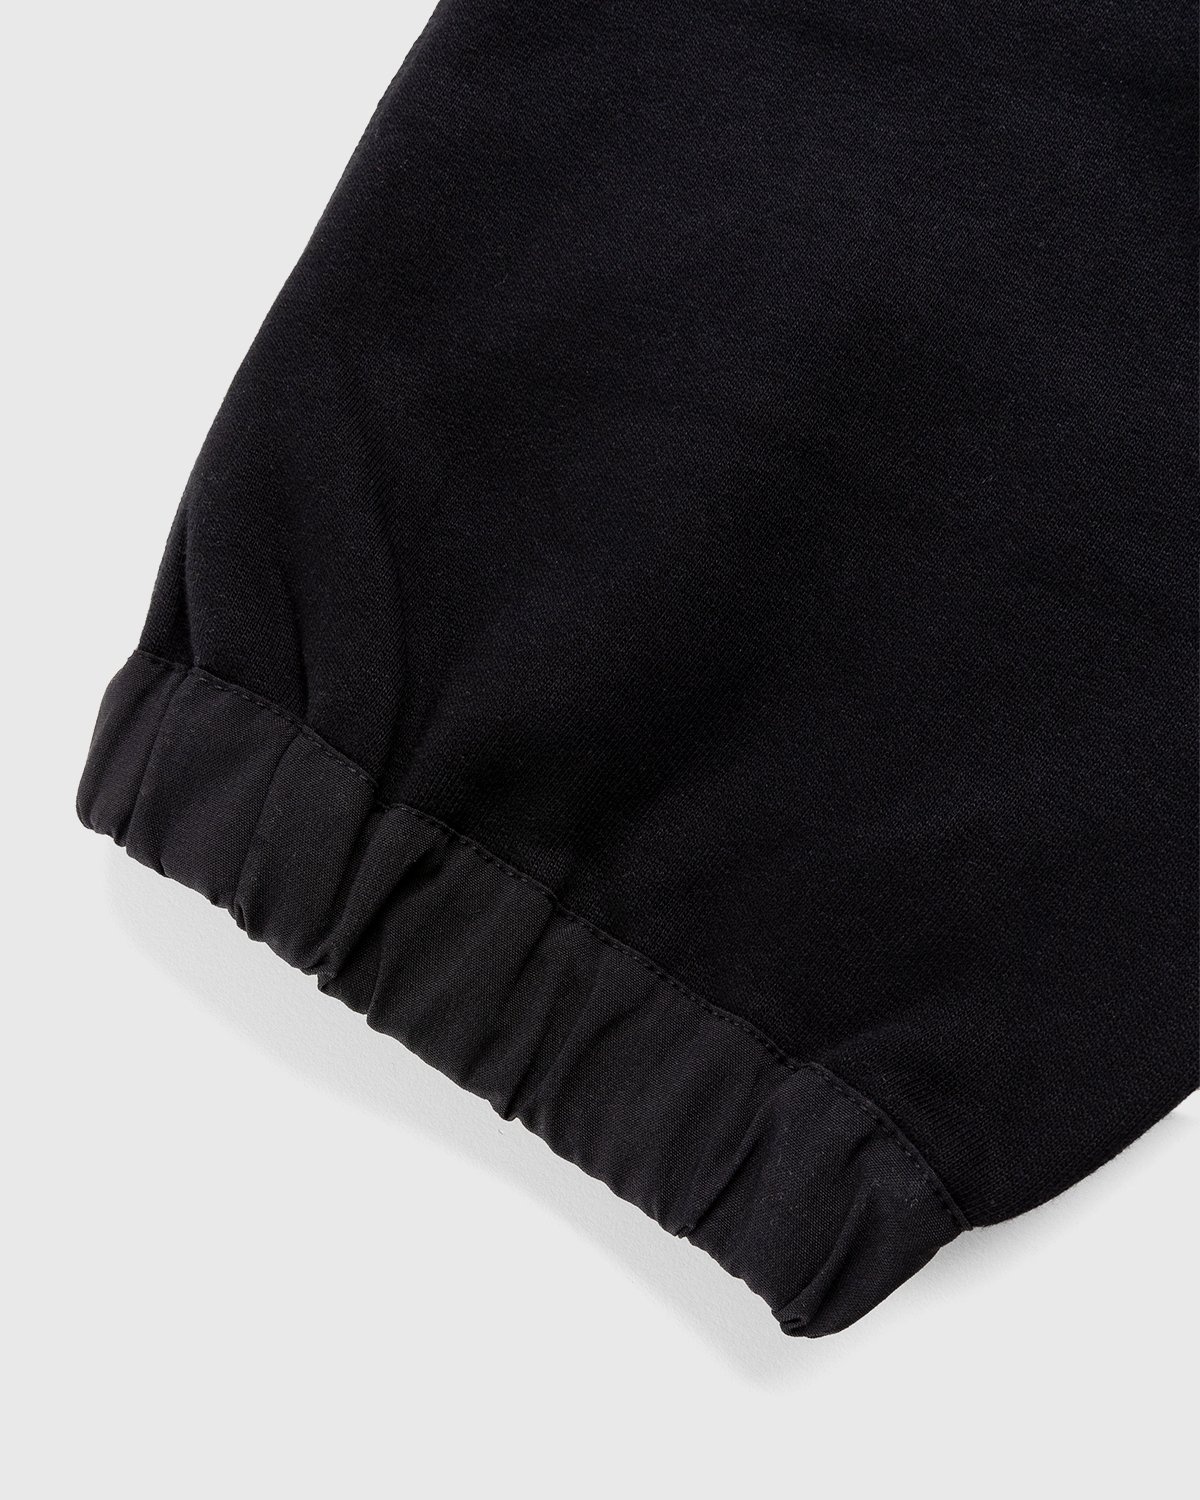 ACRONYM – P39-PR Pants Black - Pants - Black - Image 5